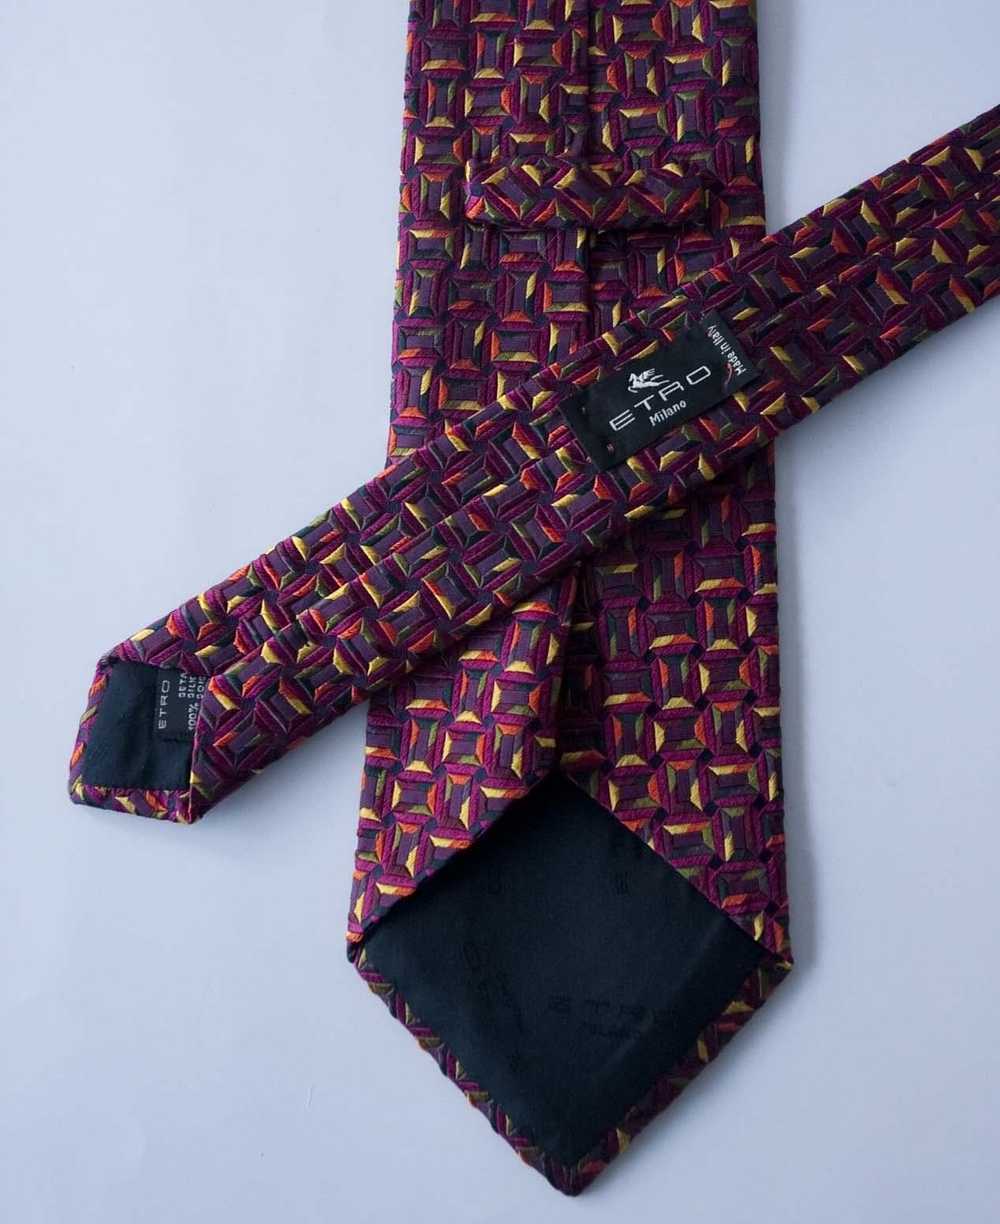 Etro Etro Milano Tie Red 100% Silk Made in Italy - image 2